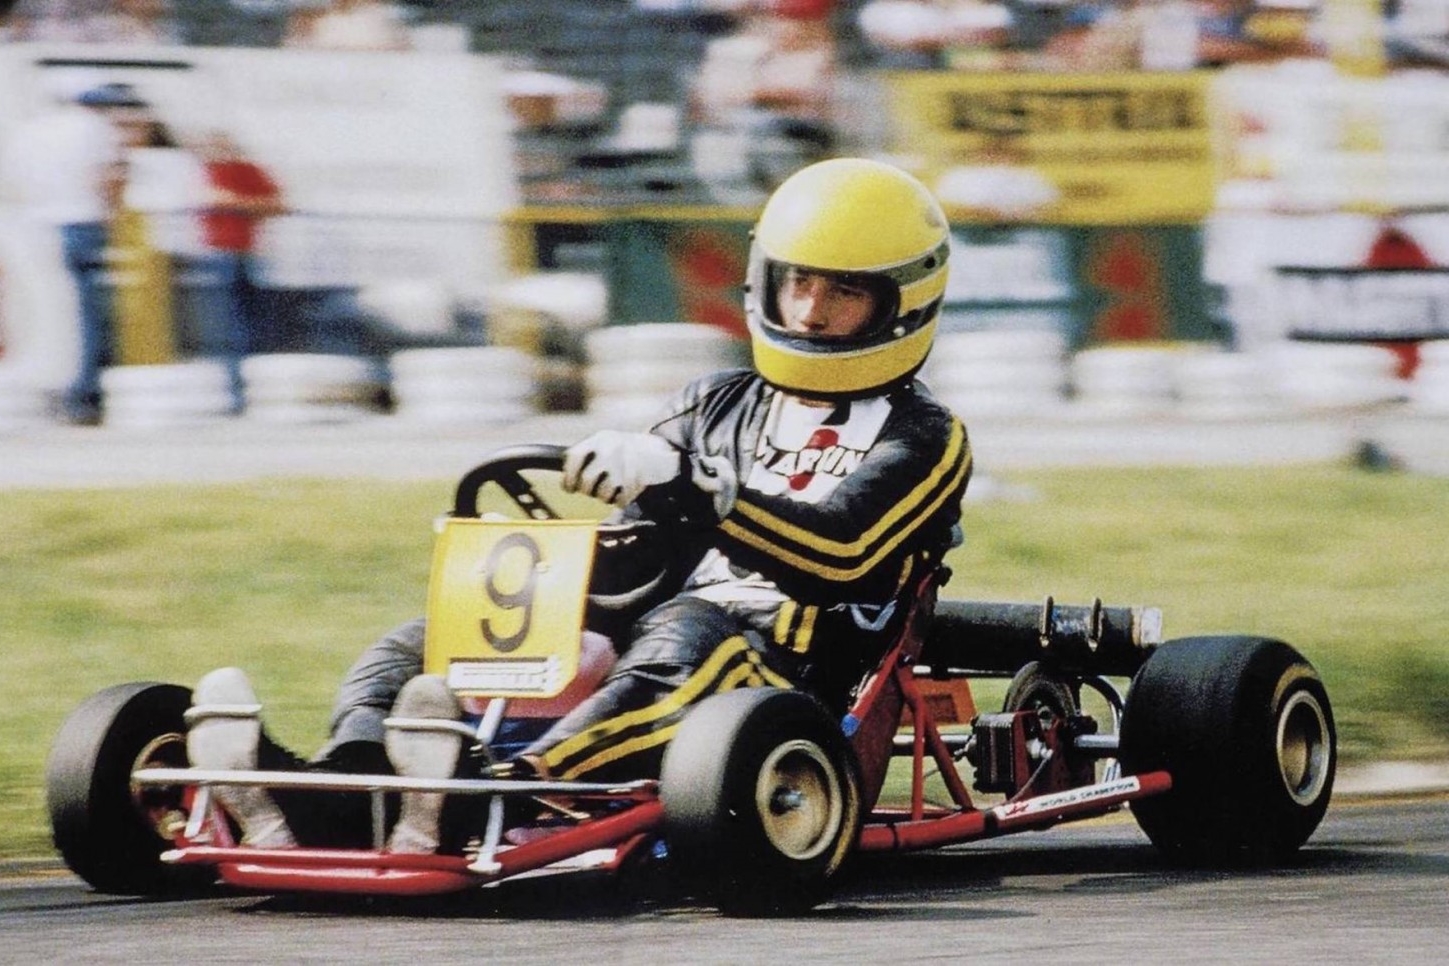 Netflix busca kartistas para grabar la serie de Ayrton Senna - Curva 1 KART